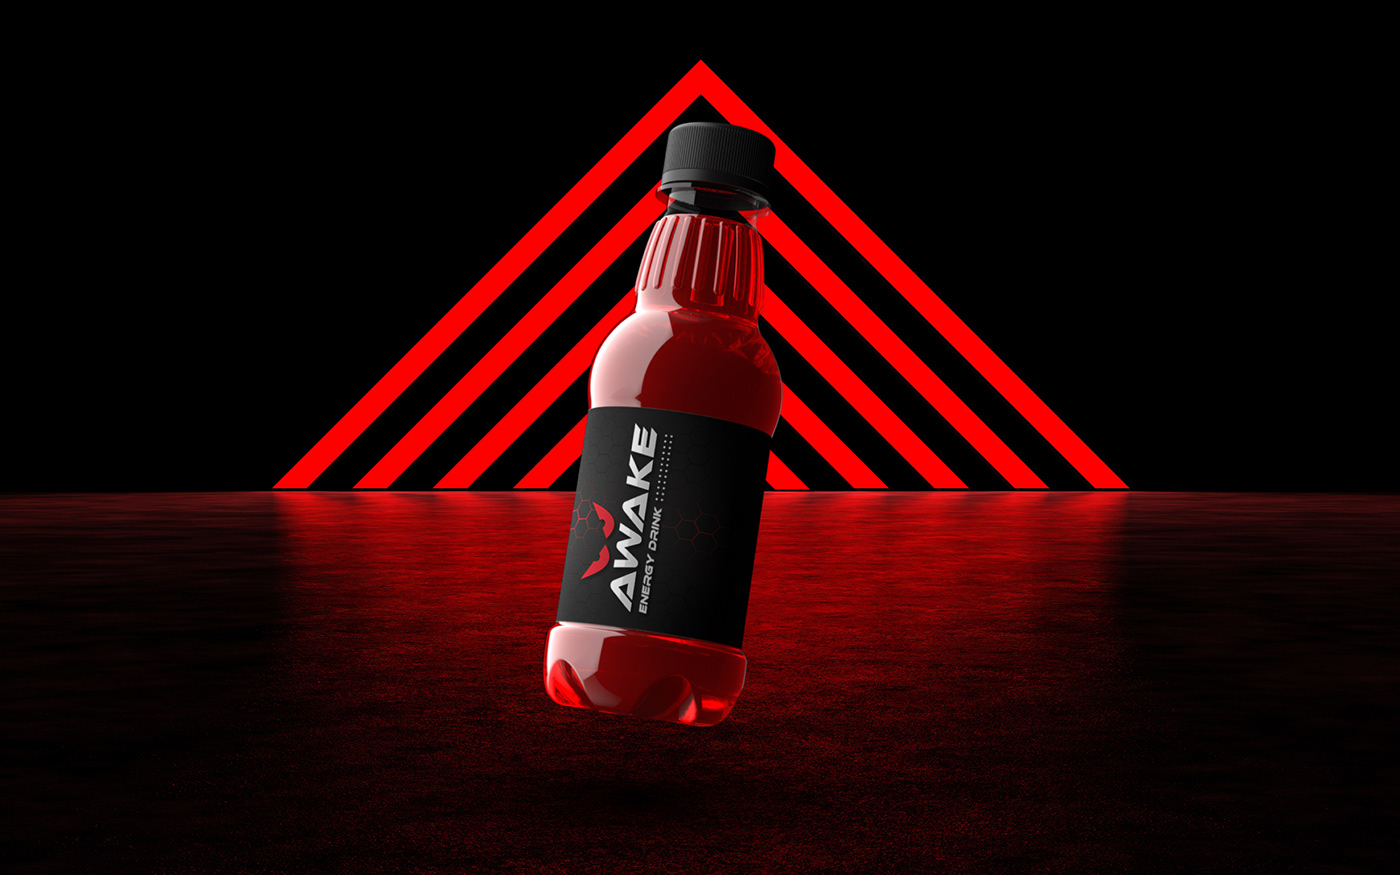 awake bottle brand identity energy energy drink Packaging packaging design red and black